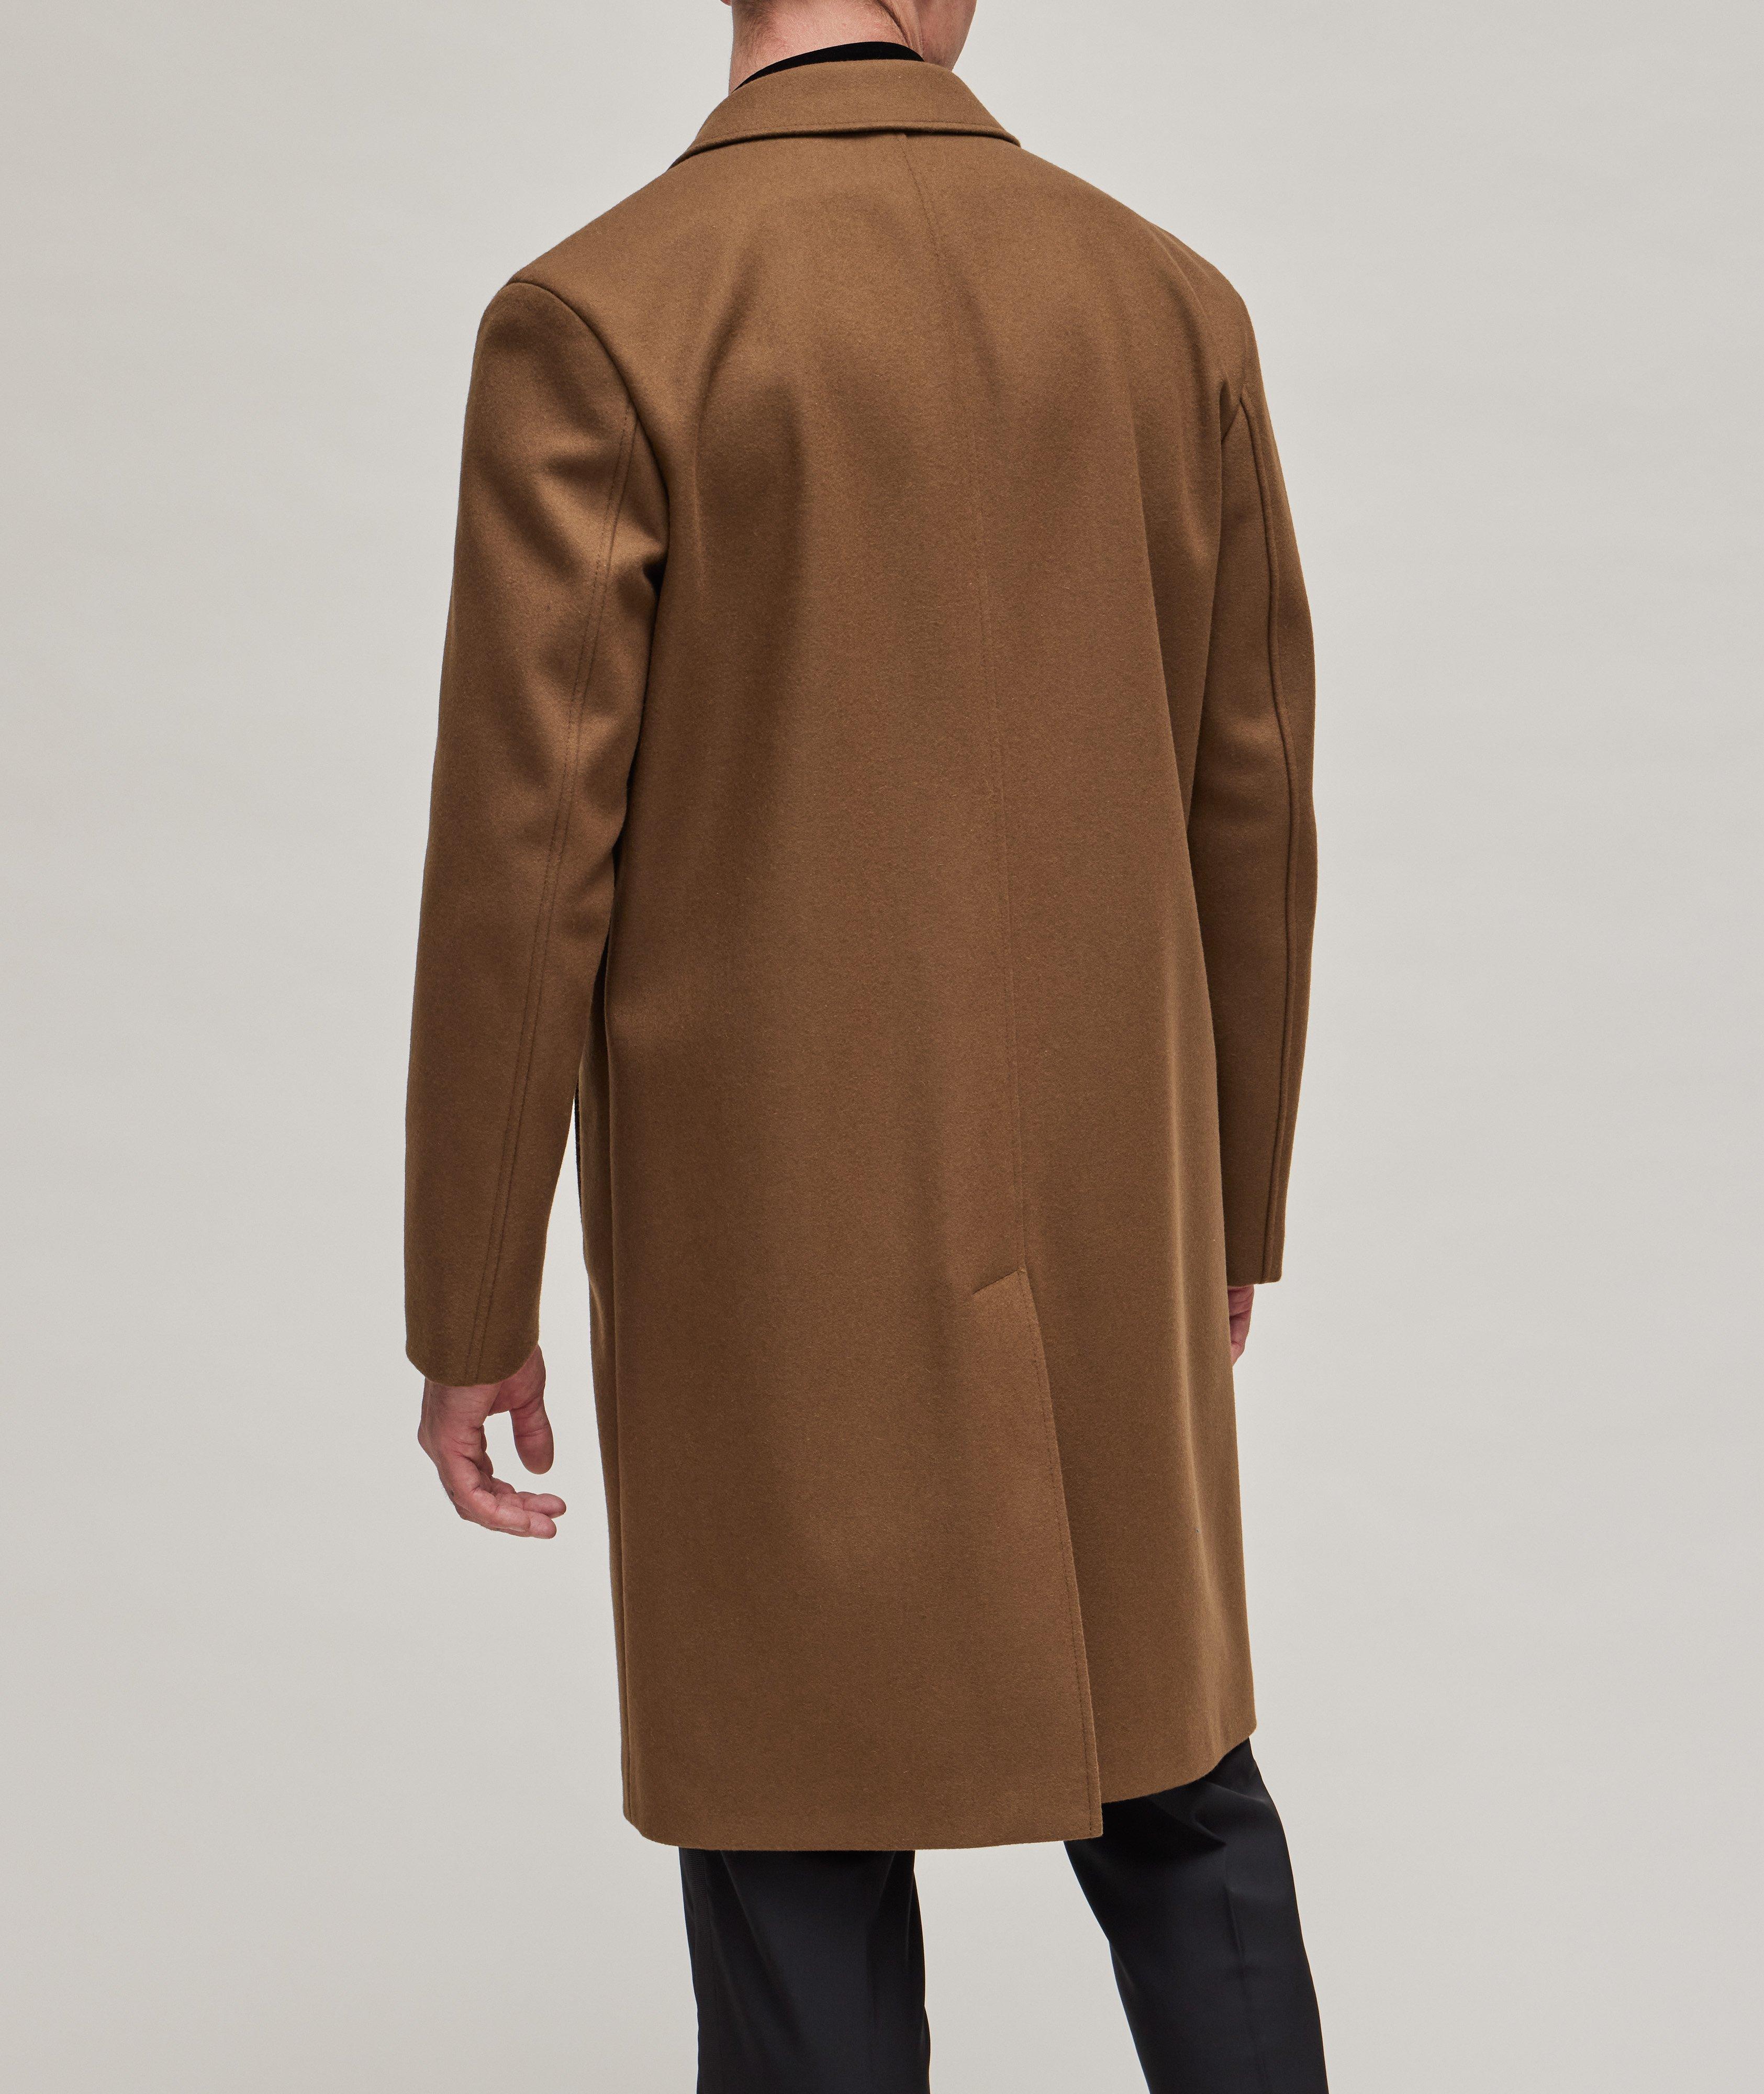 Malox Wool-Blend Overcoat image 2